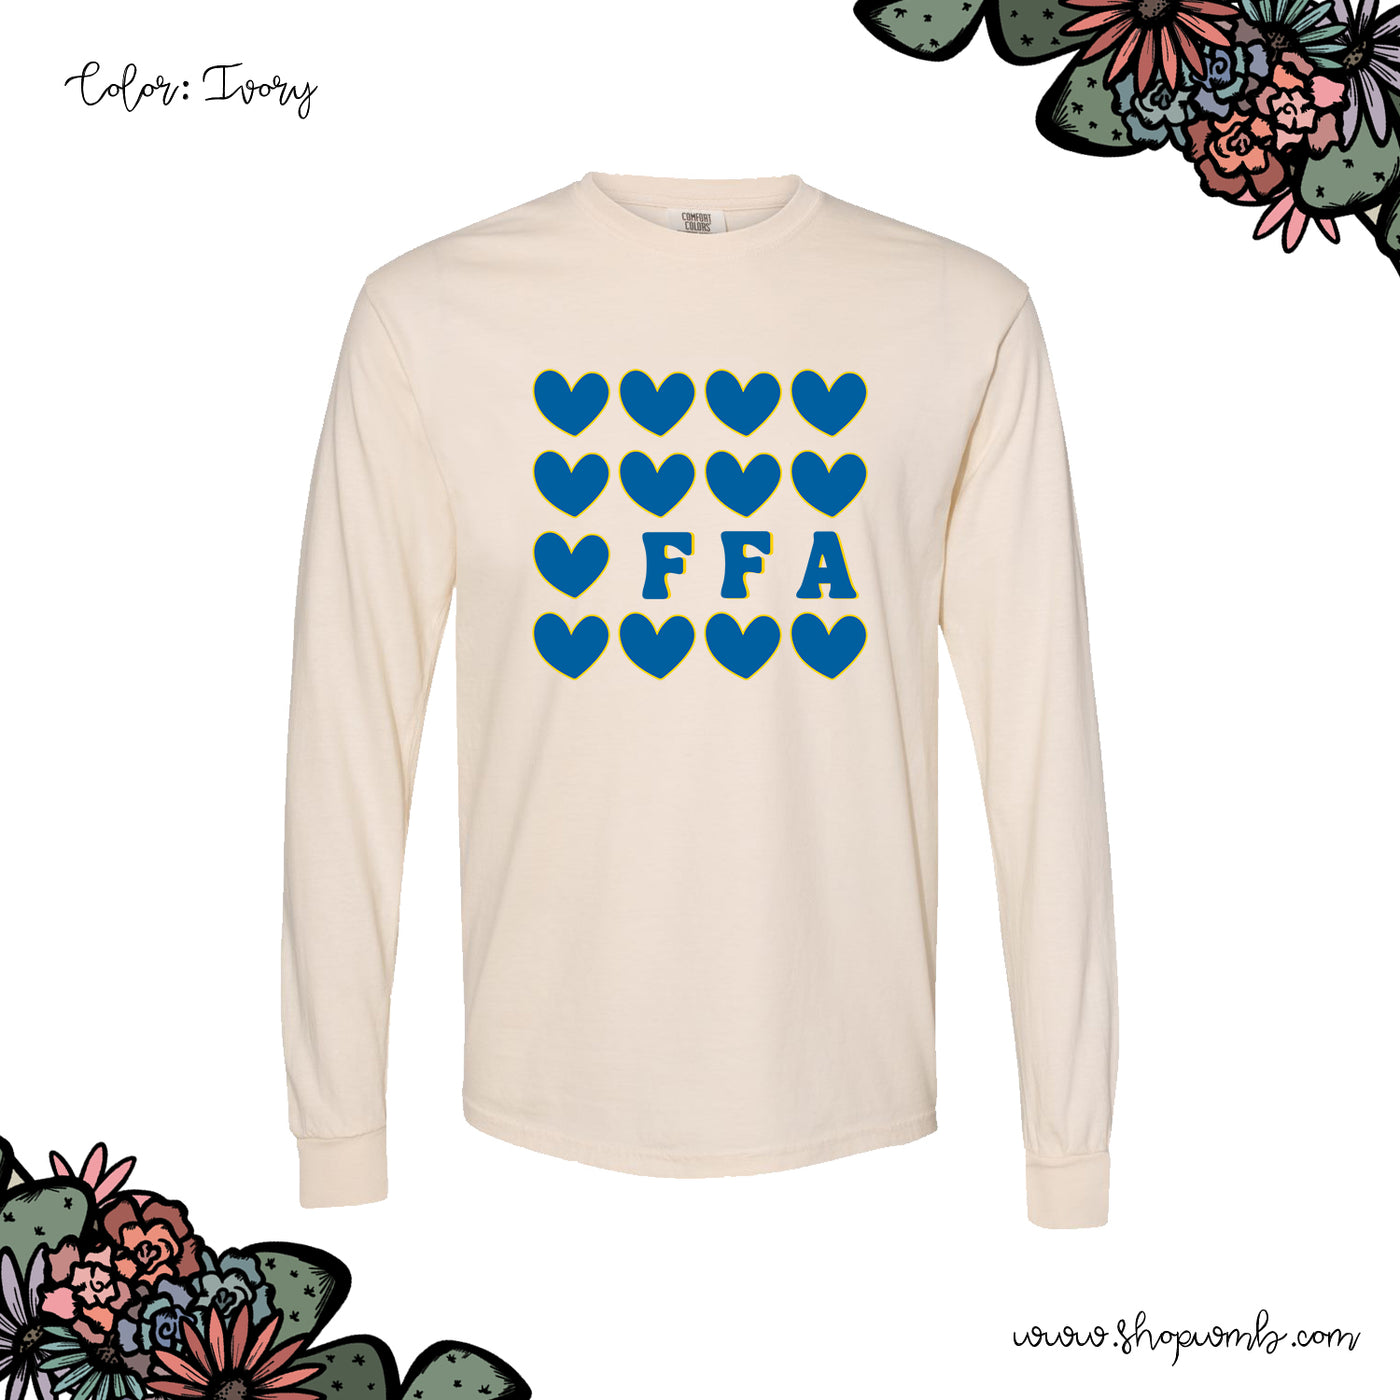 FFA hearts LONG SLEEVE T-Shirt (S-3XL) - Multiple Colors!